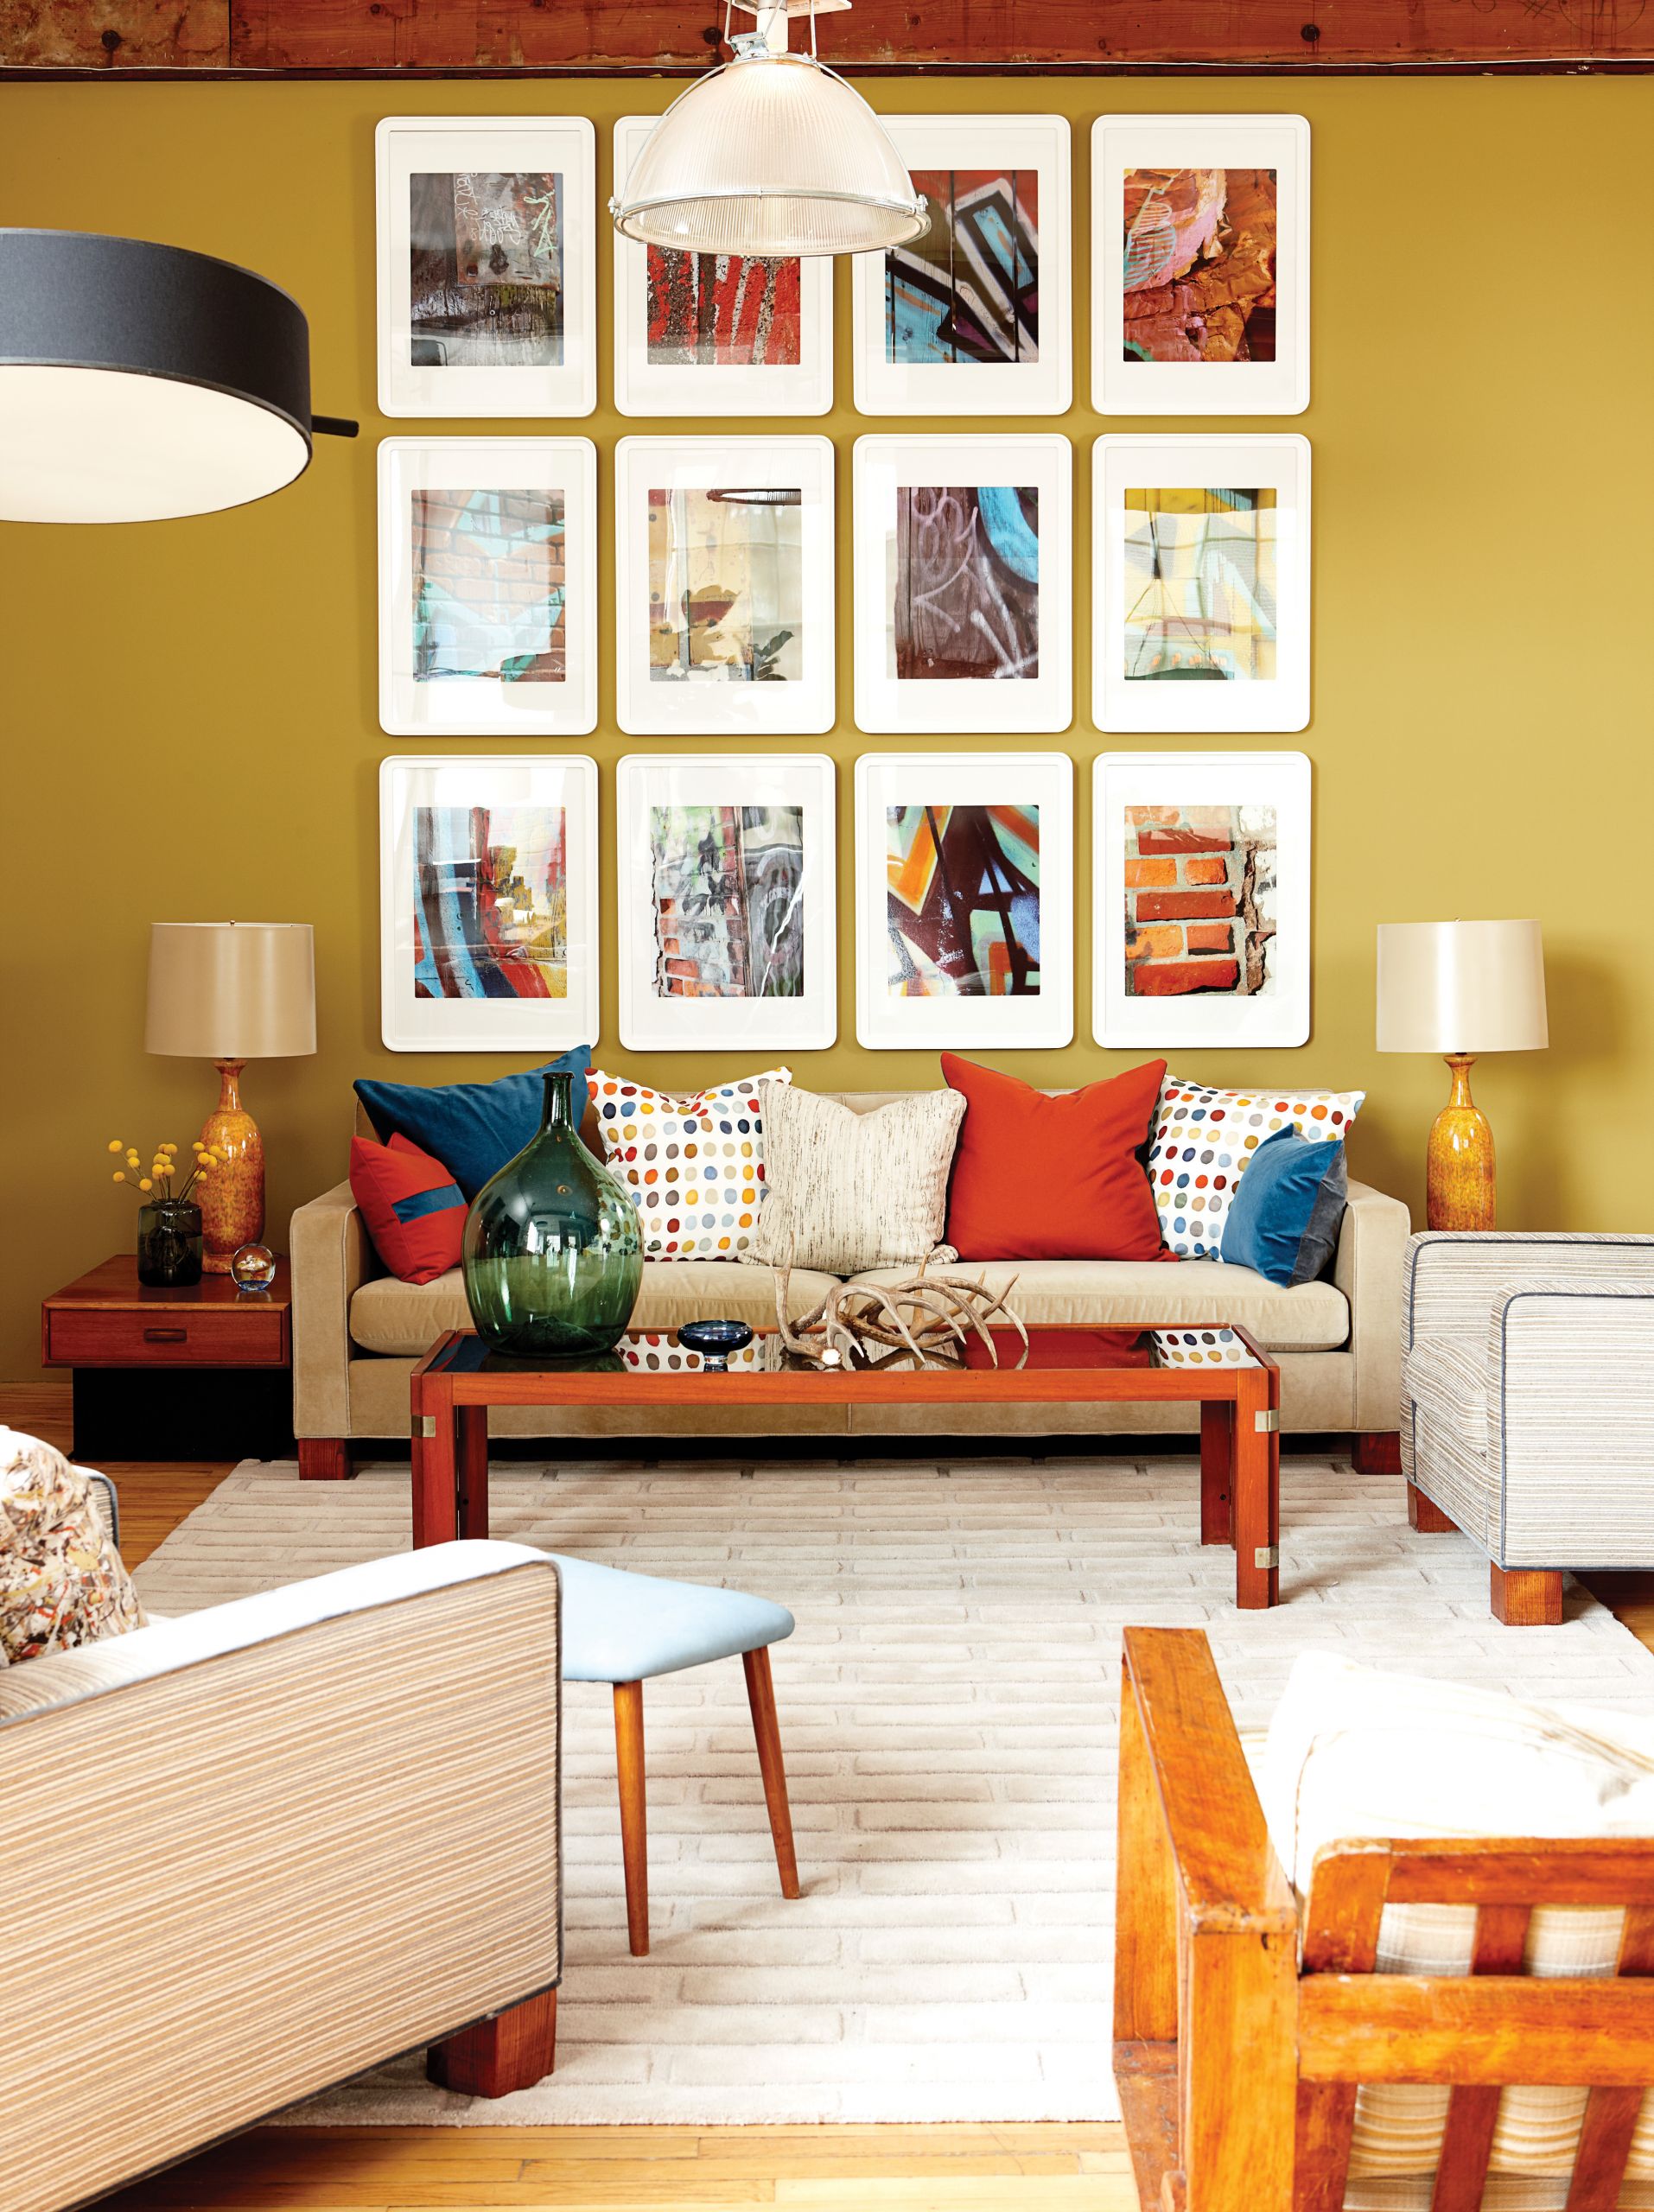 Living Room Wall Design
 Loft decorating ideas Nine tips from Sarah Richardson